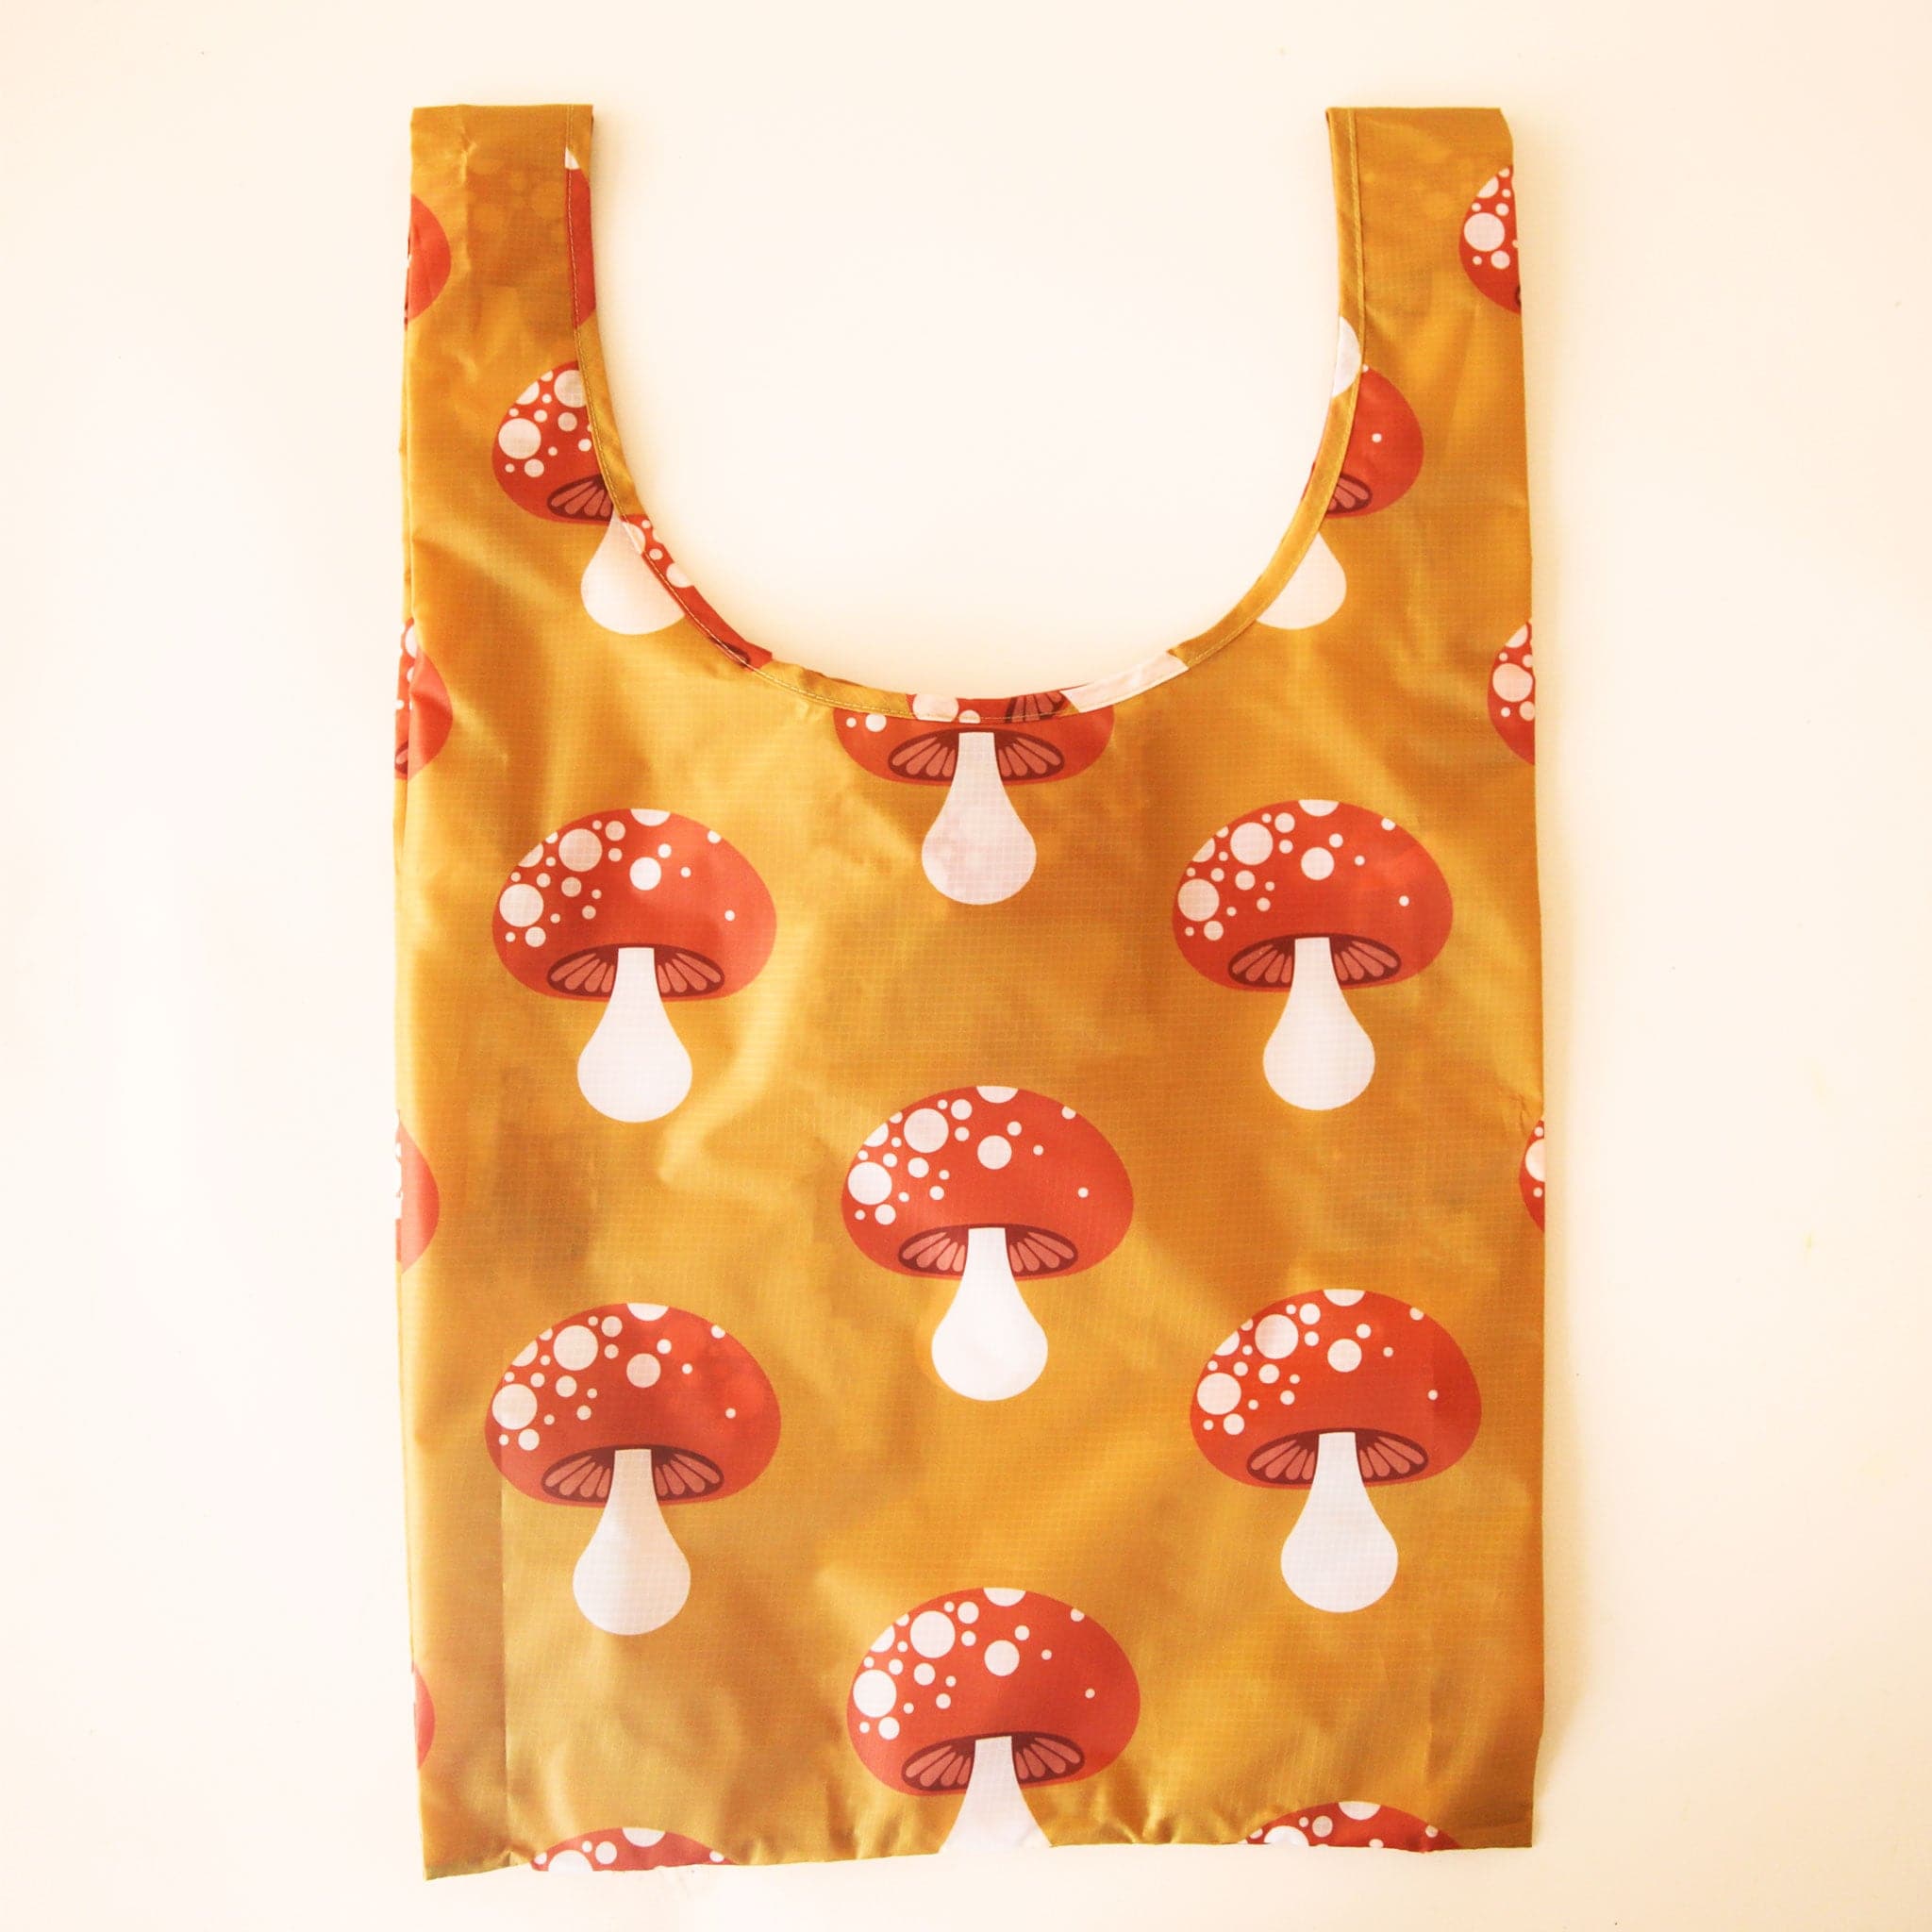 A mustard yellow nylon bag with reddish and cream mushroom print.